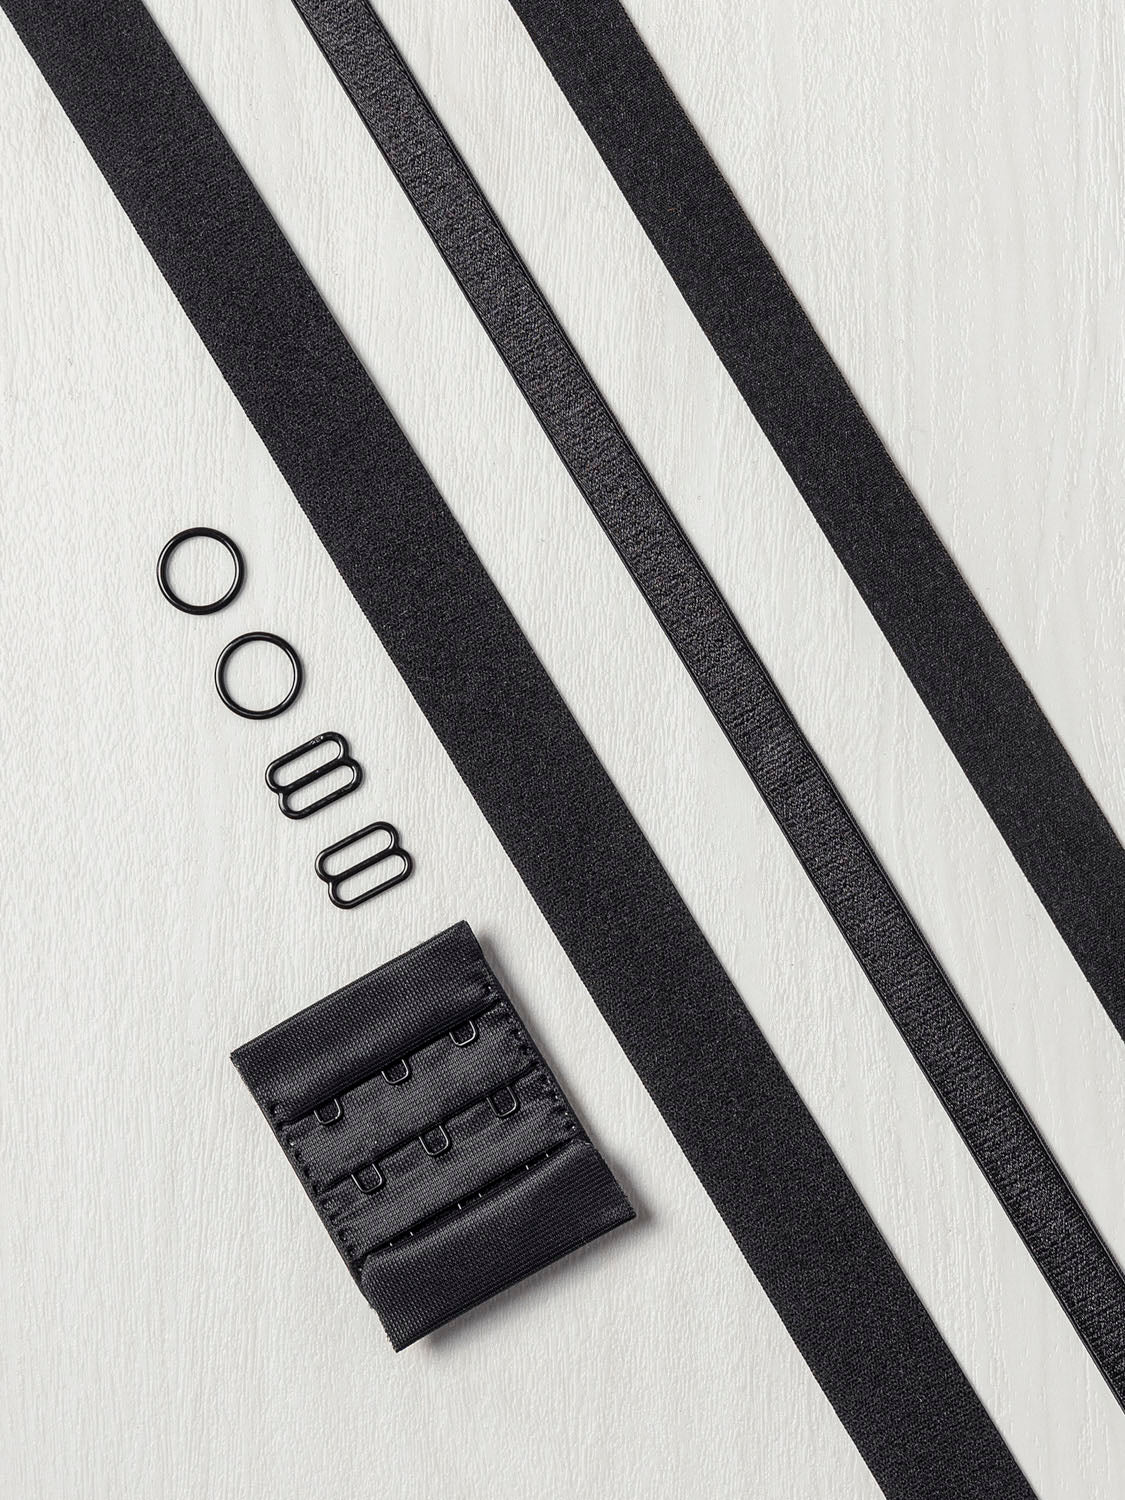 Black & White Stripe Buttons - 2 Sizes – La Mercerie